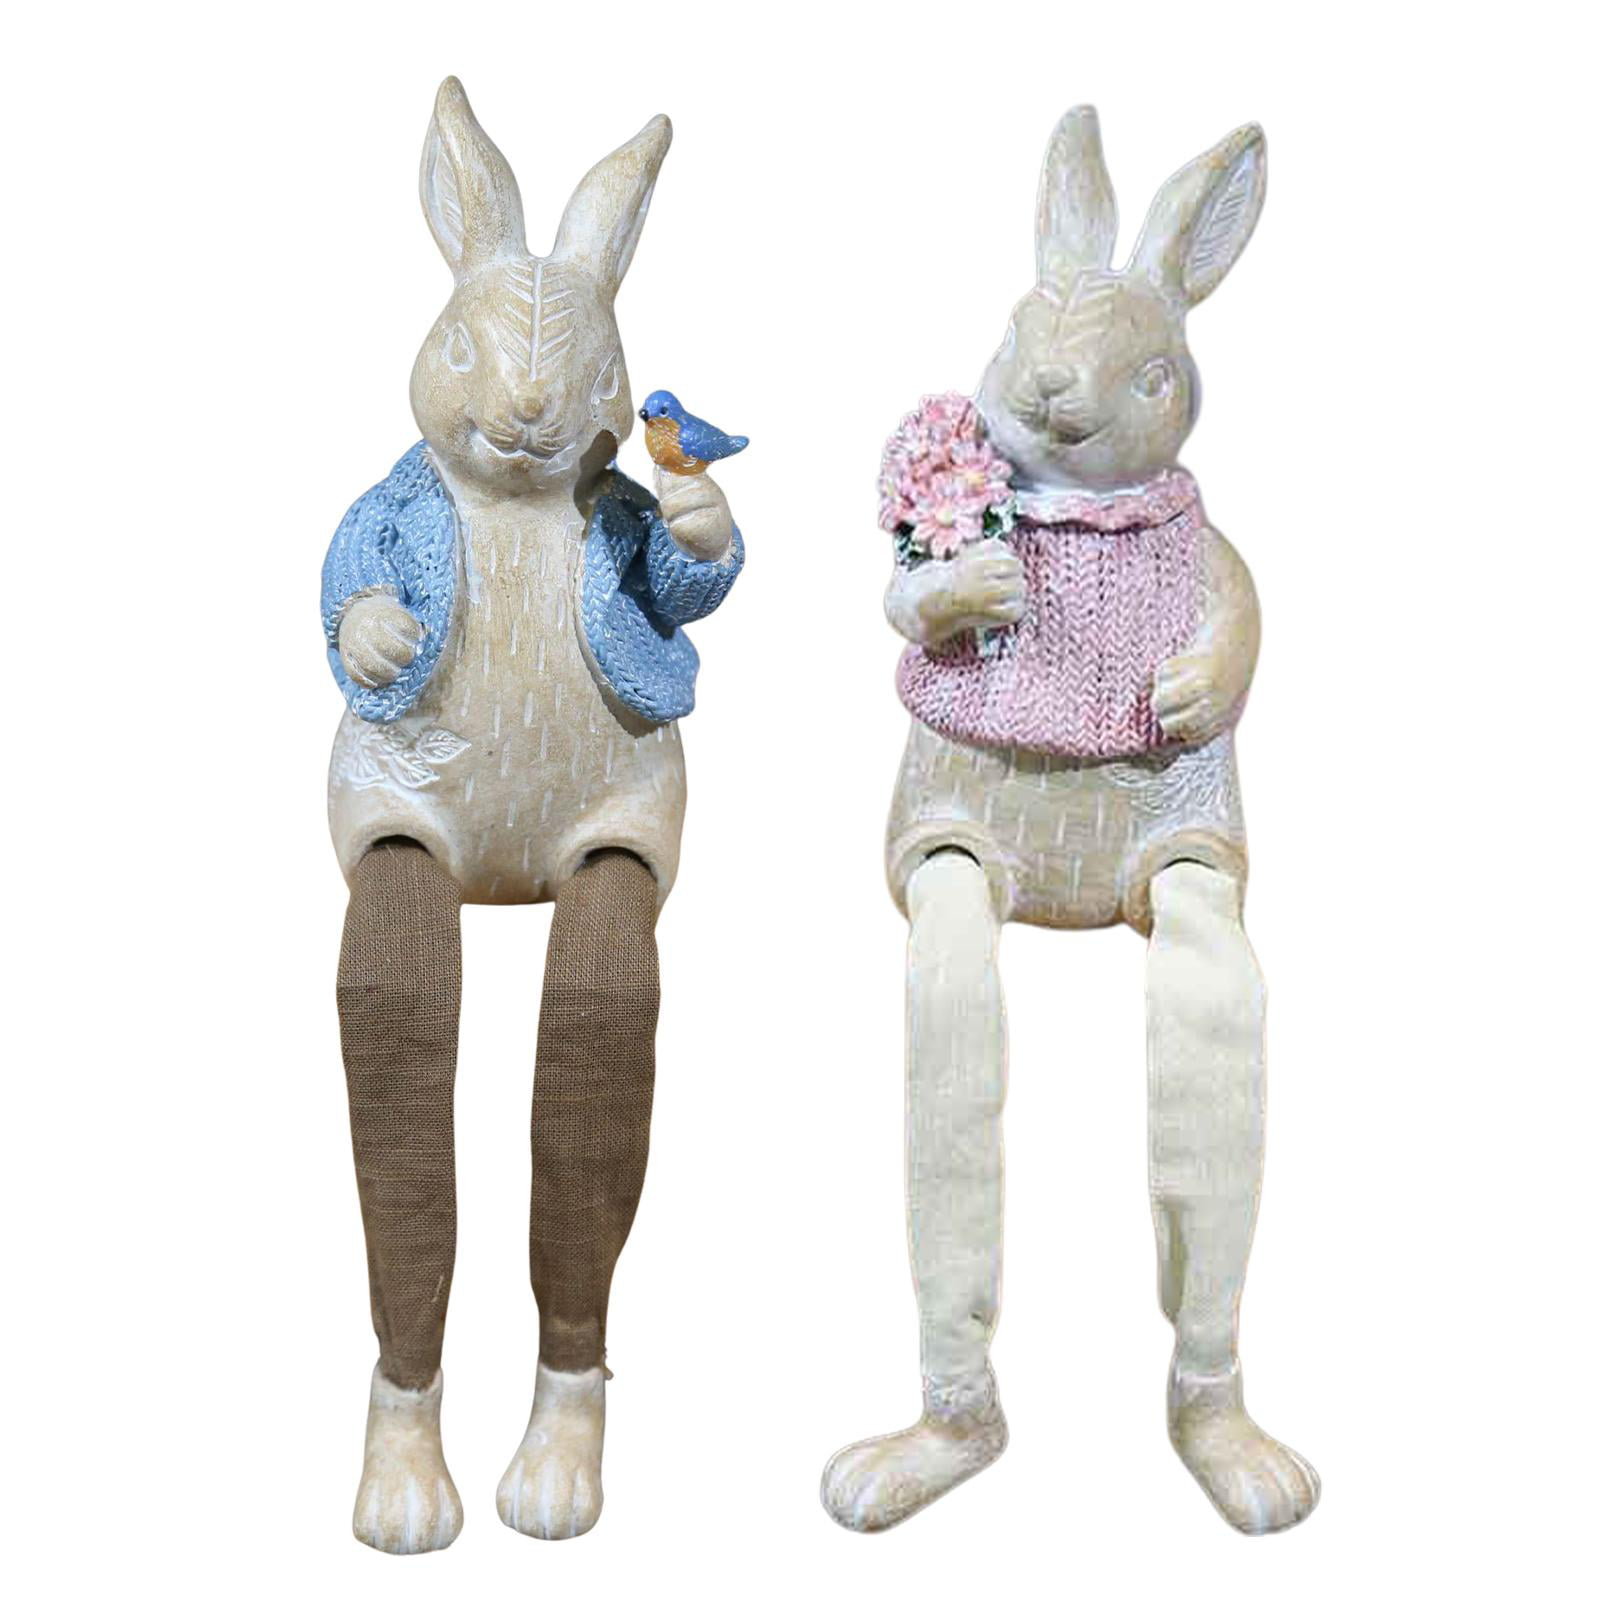 Bunny Rabbit Statue Garden Statuary Figurines Lawn Yard Ornament Resin Sculpture 